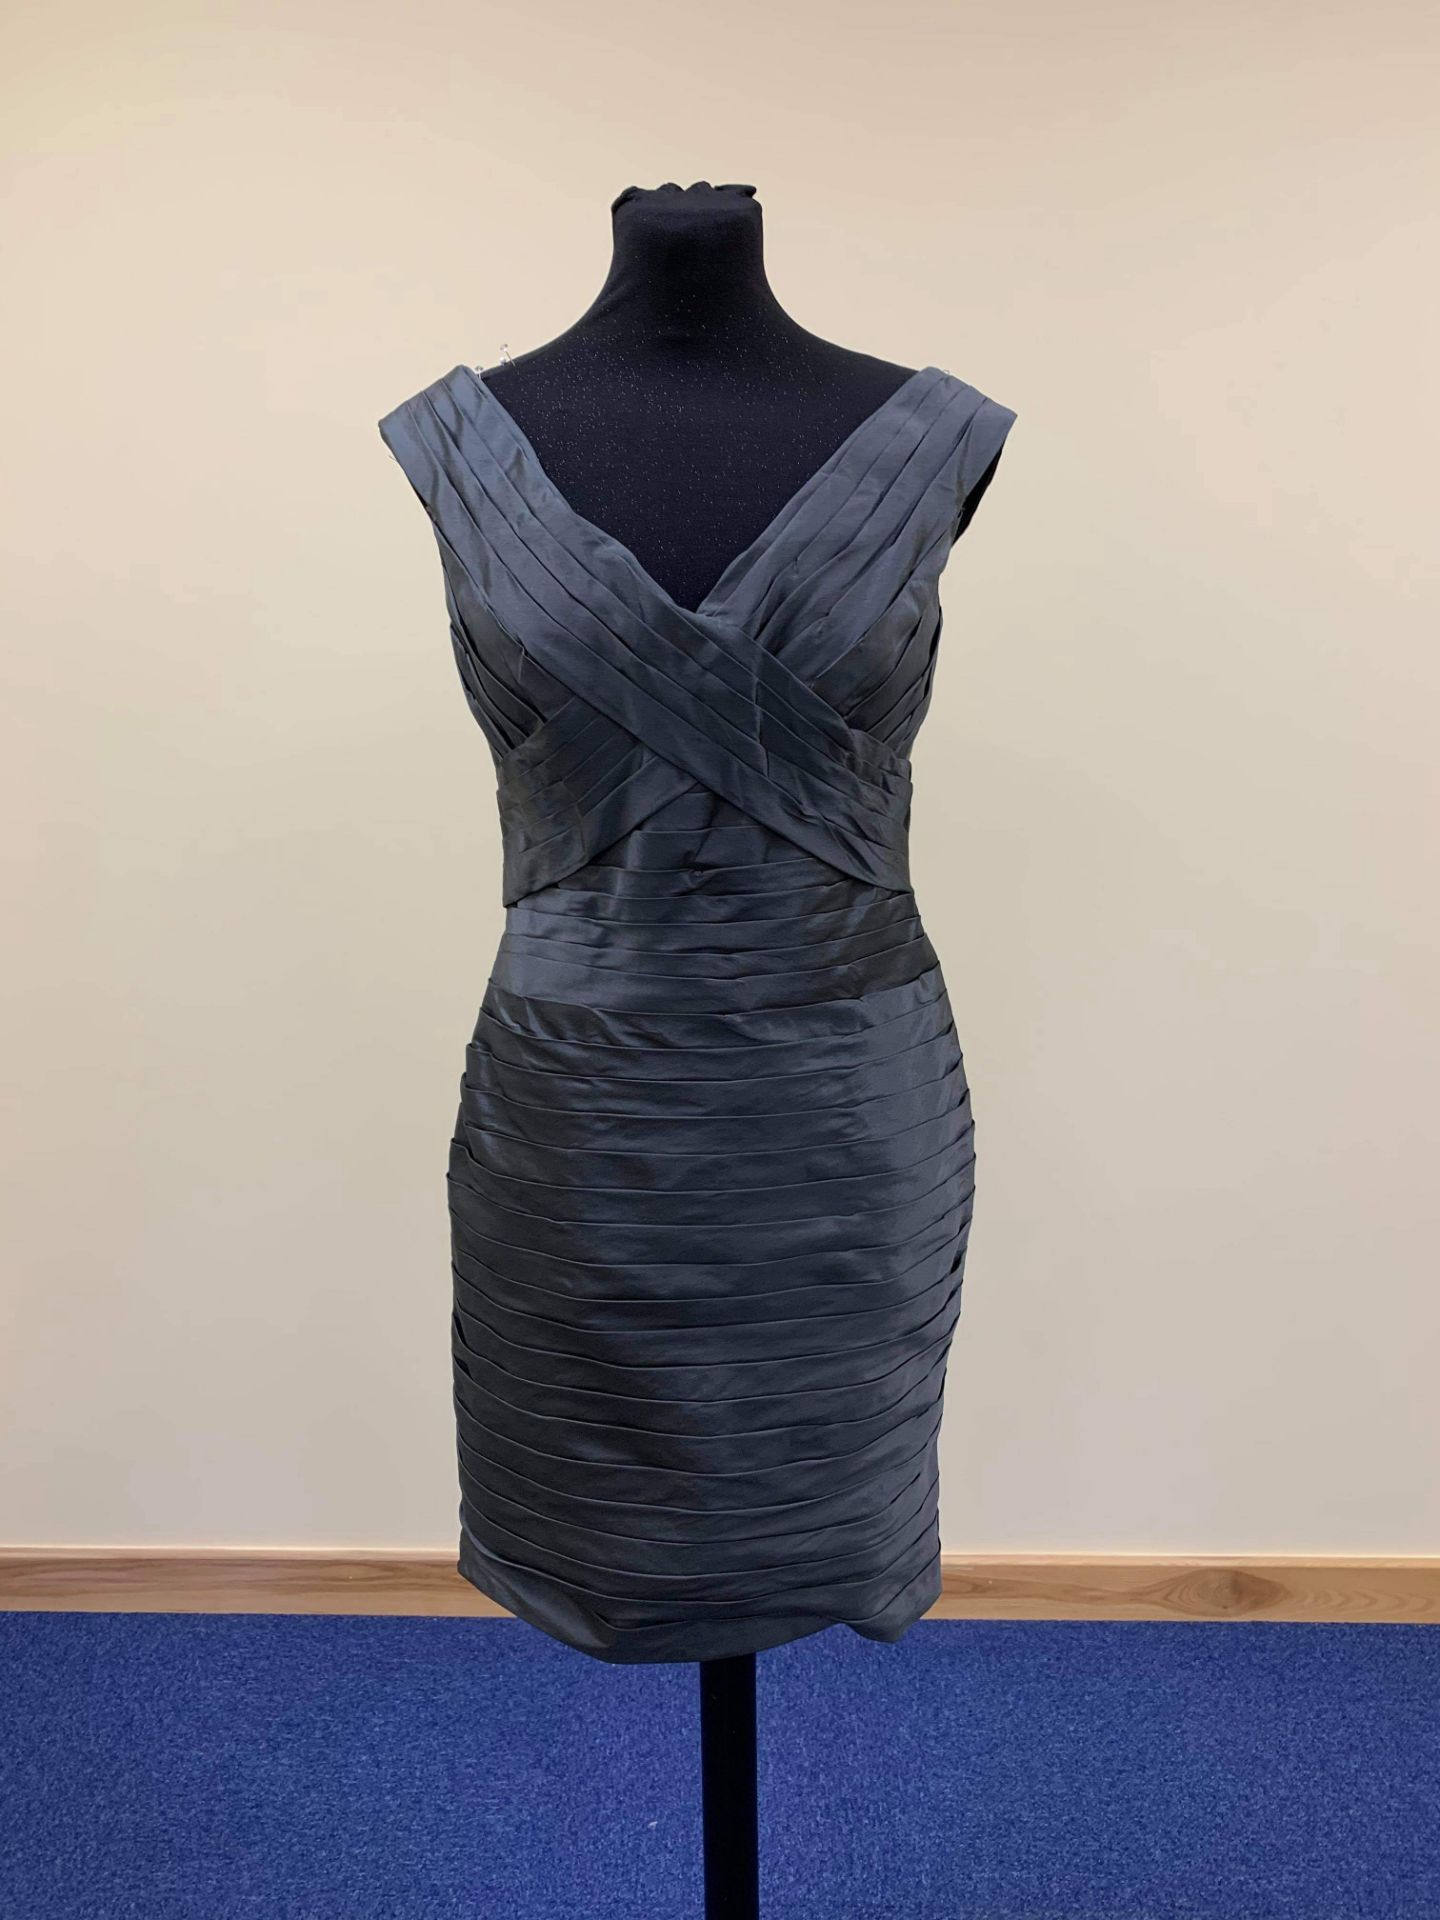 Charcoal Grey Short Dress - Image 2 of 2